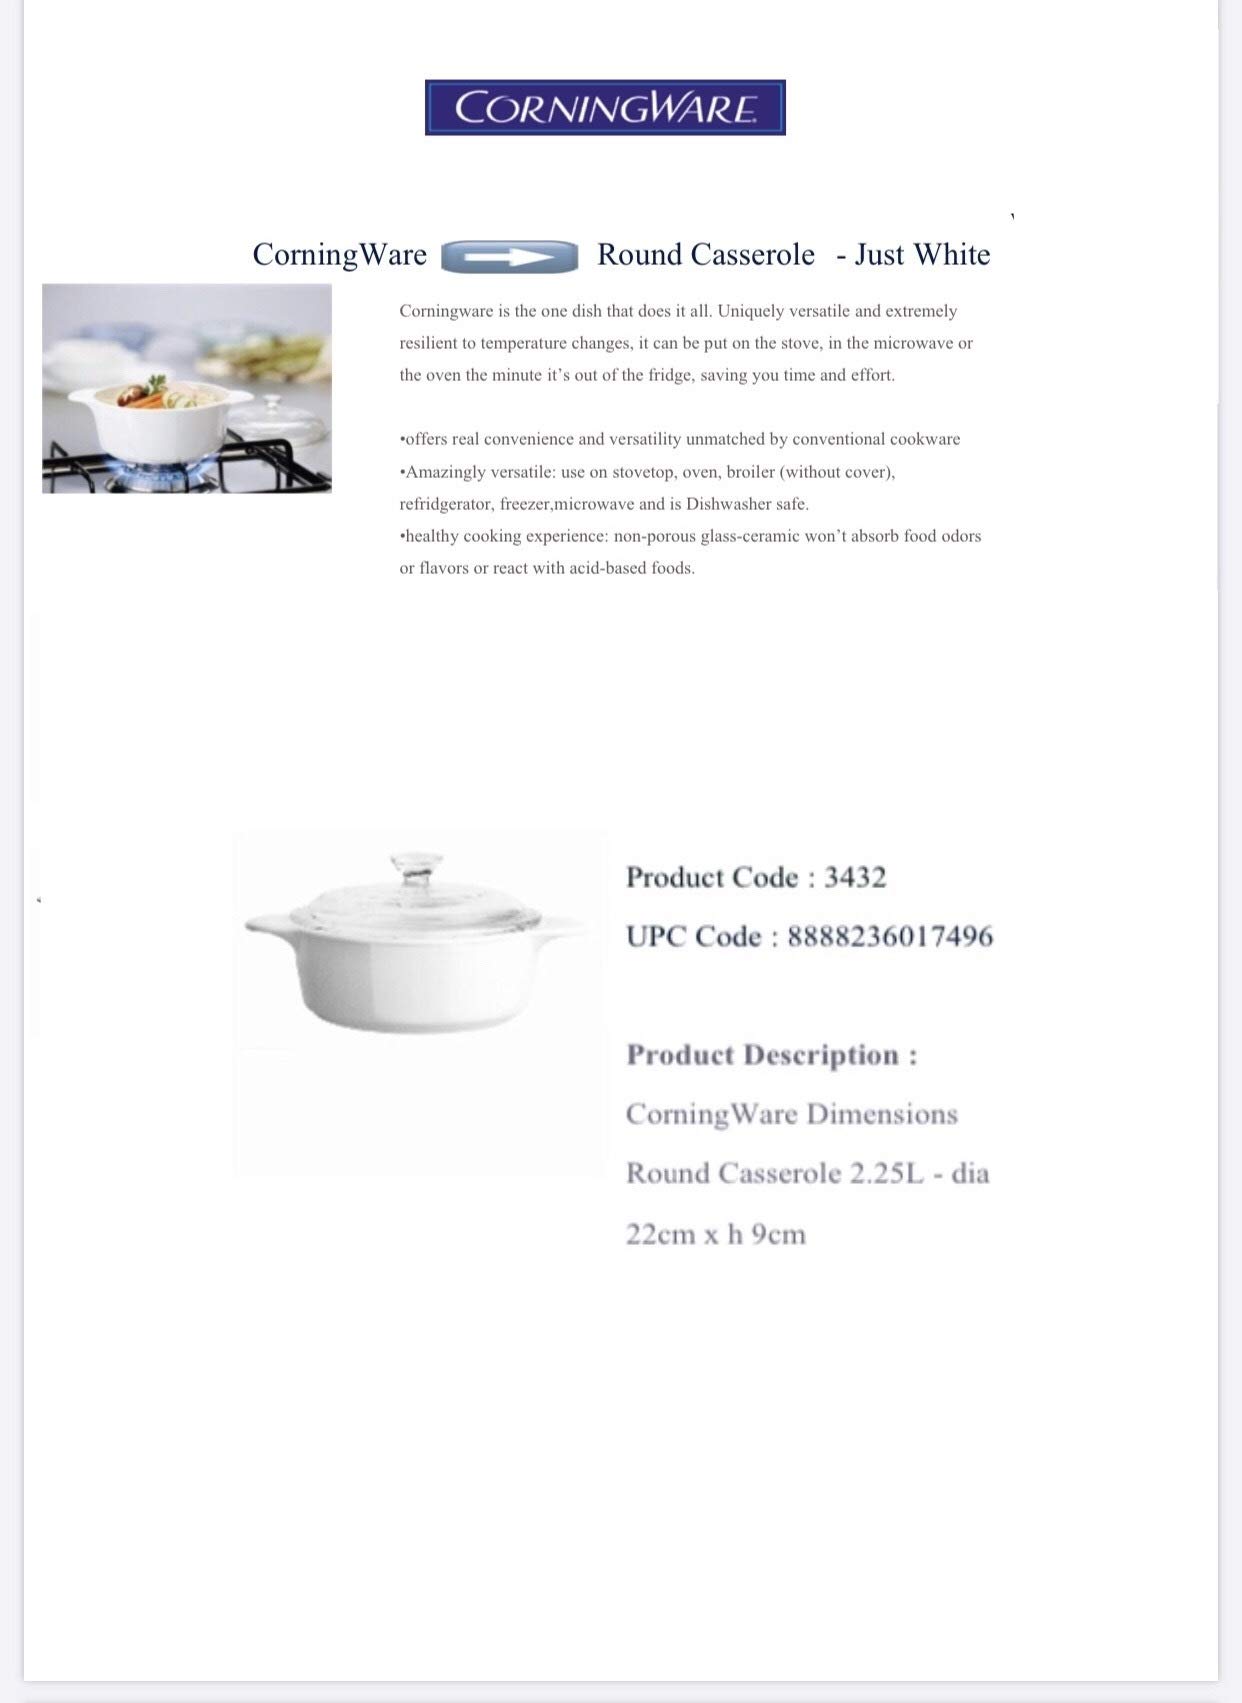 CorningWare Glass-Ceramic Pyroceram Round Classic Casserole, 2.4 Quart / 2.25 Liter Cooking Pot with Handles & Glass Cover - White (Medium)